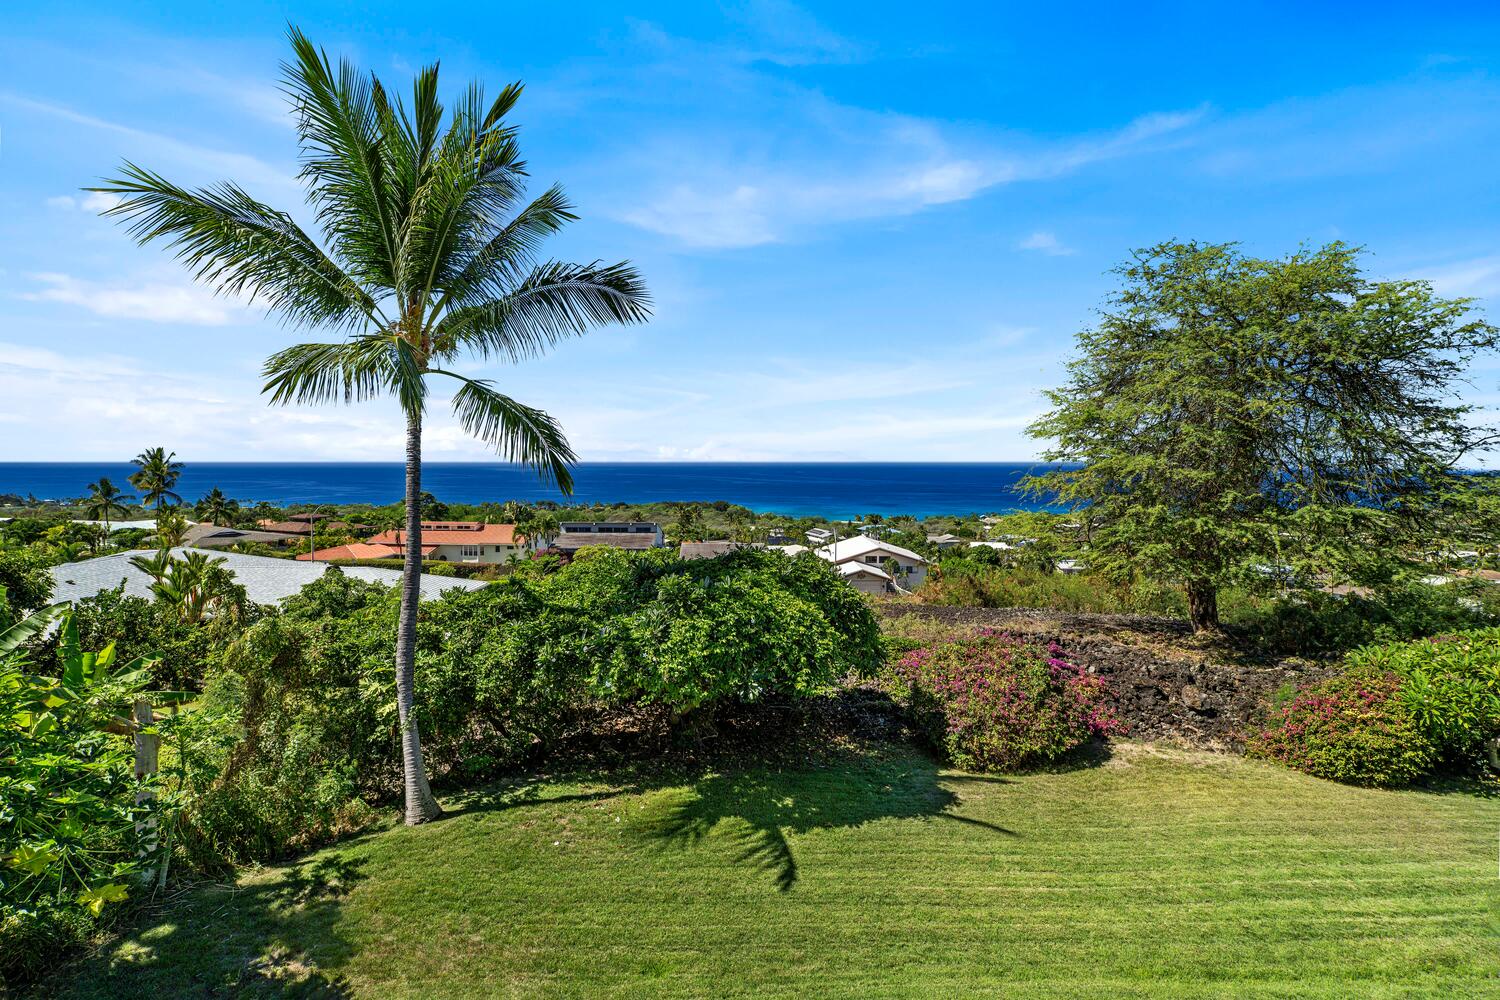 Kailua Kona Vacation Rentals, Ho'okipa Hale - Lush greeneries